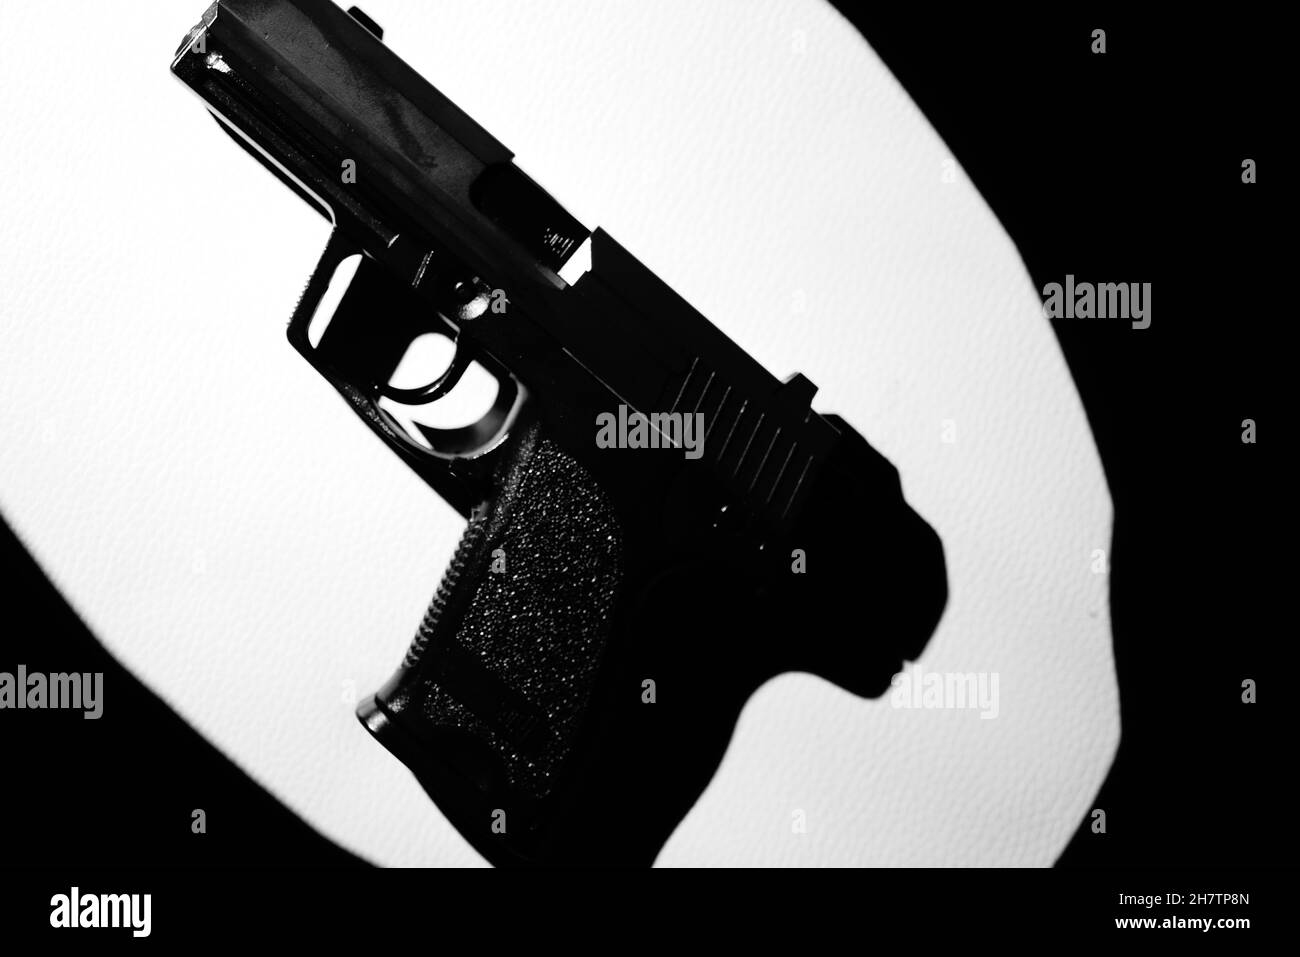 Automatic 9mm pistol gun crime thriller book cover design photo. Stock Photo